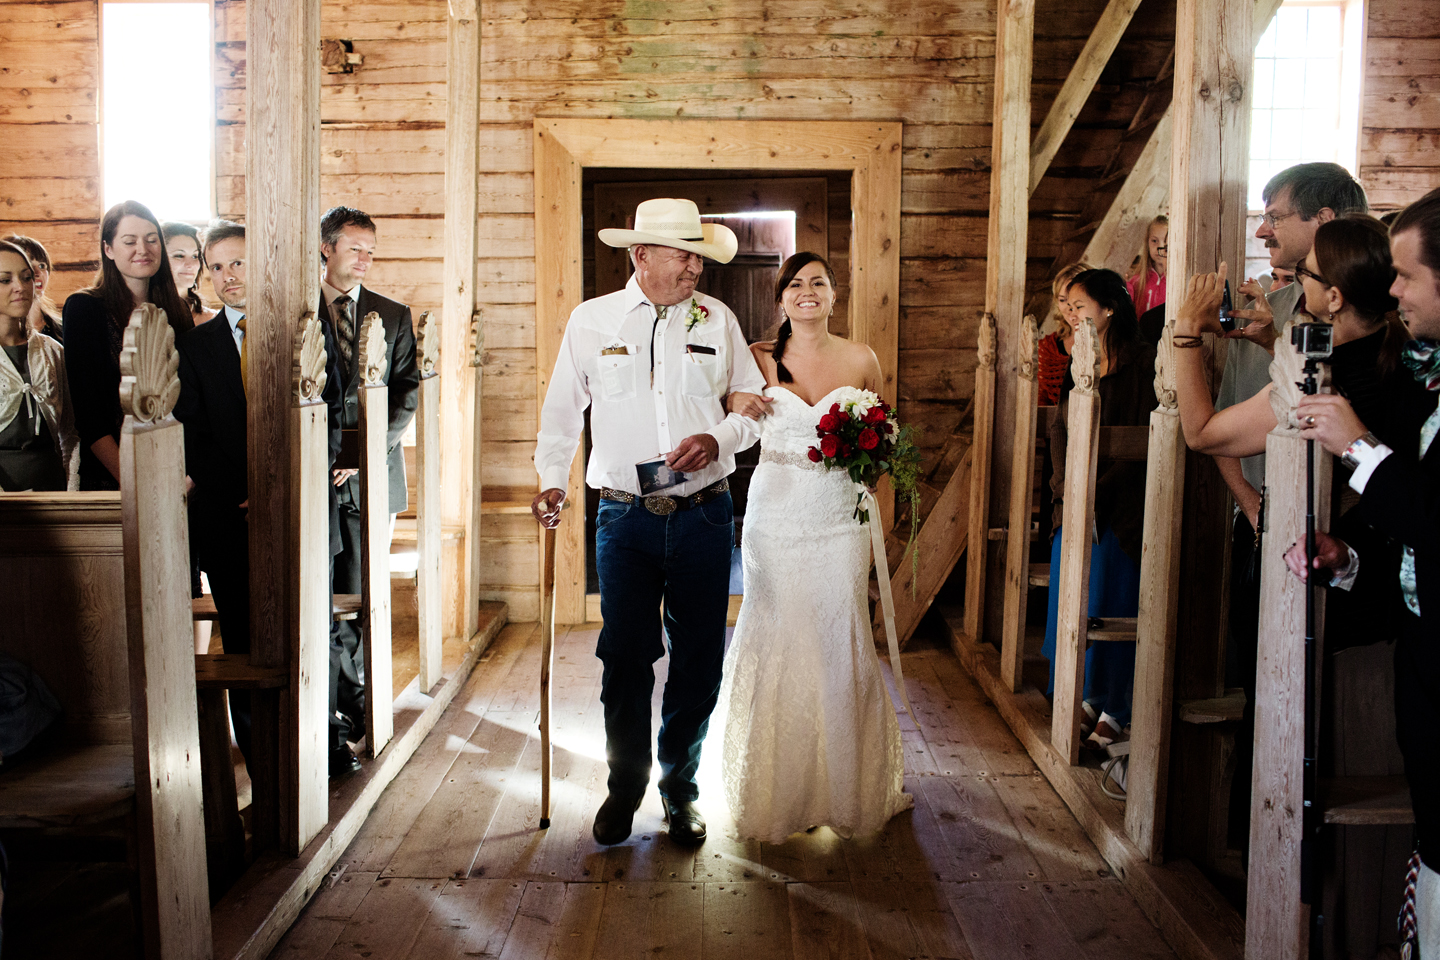 Norway Wedding | Destination Wedding Photographer Eliesa Johnson of Photogen Inc. | Based in Minneapolis, Minnesota